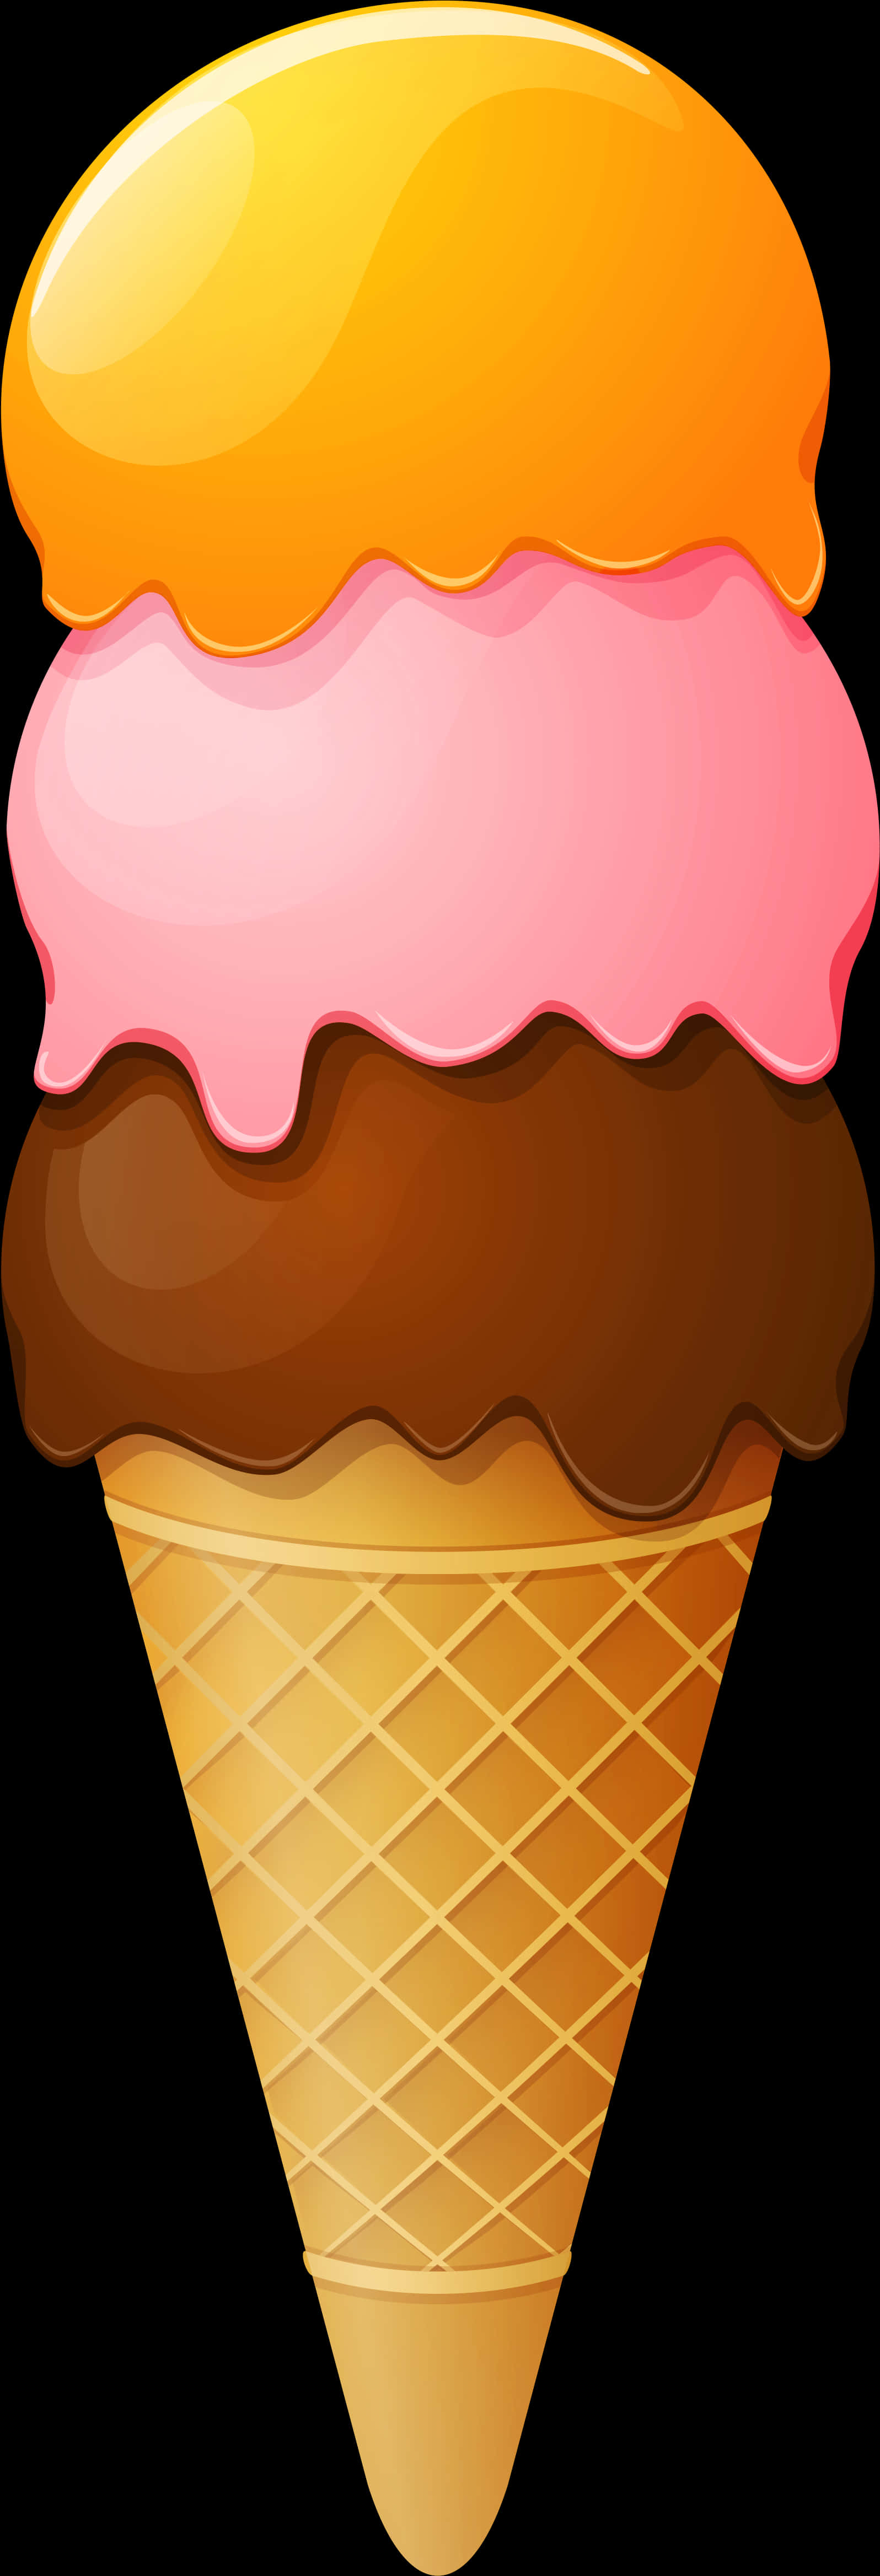 A Cartoon Ice Cream Cone